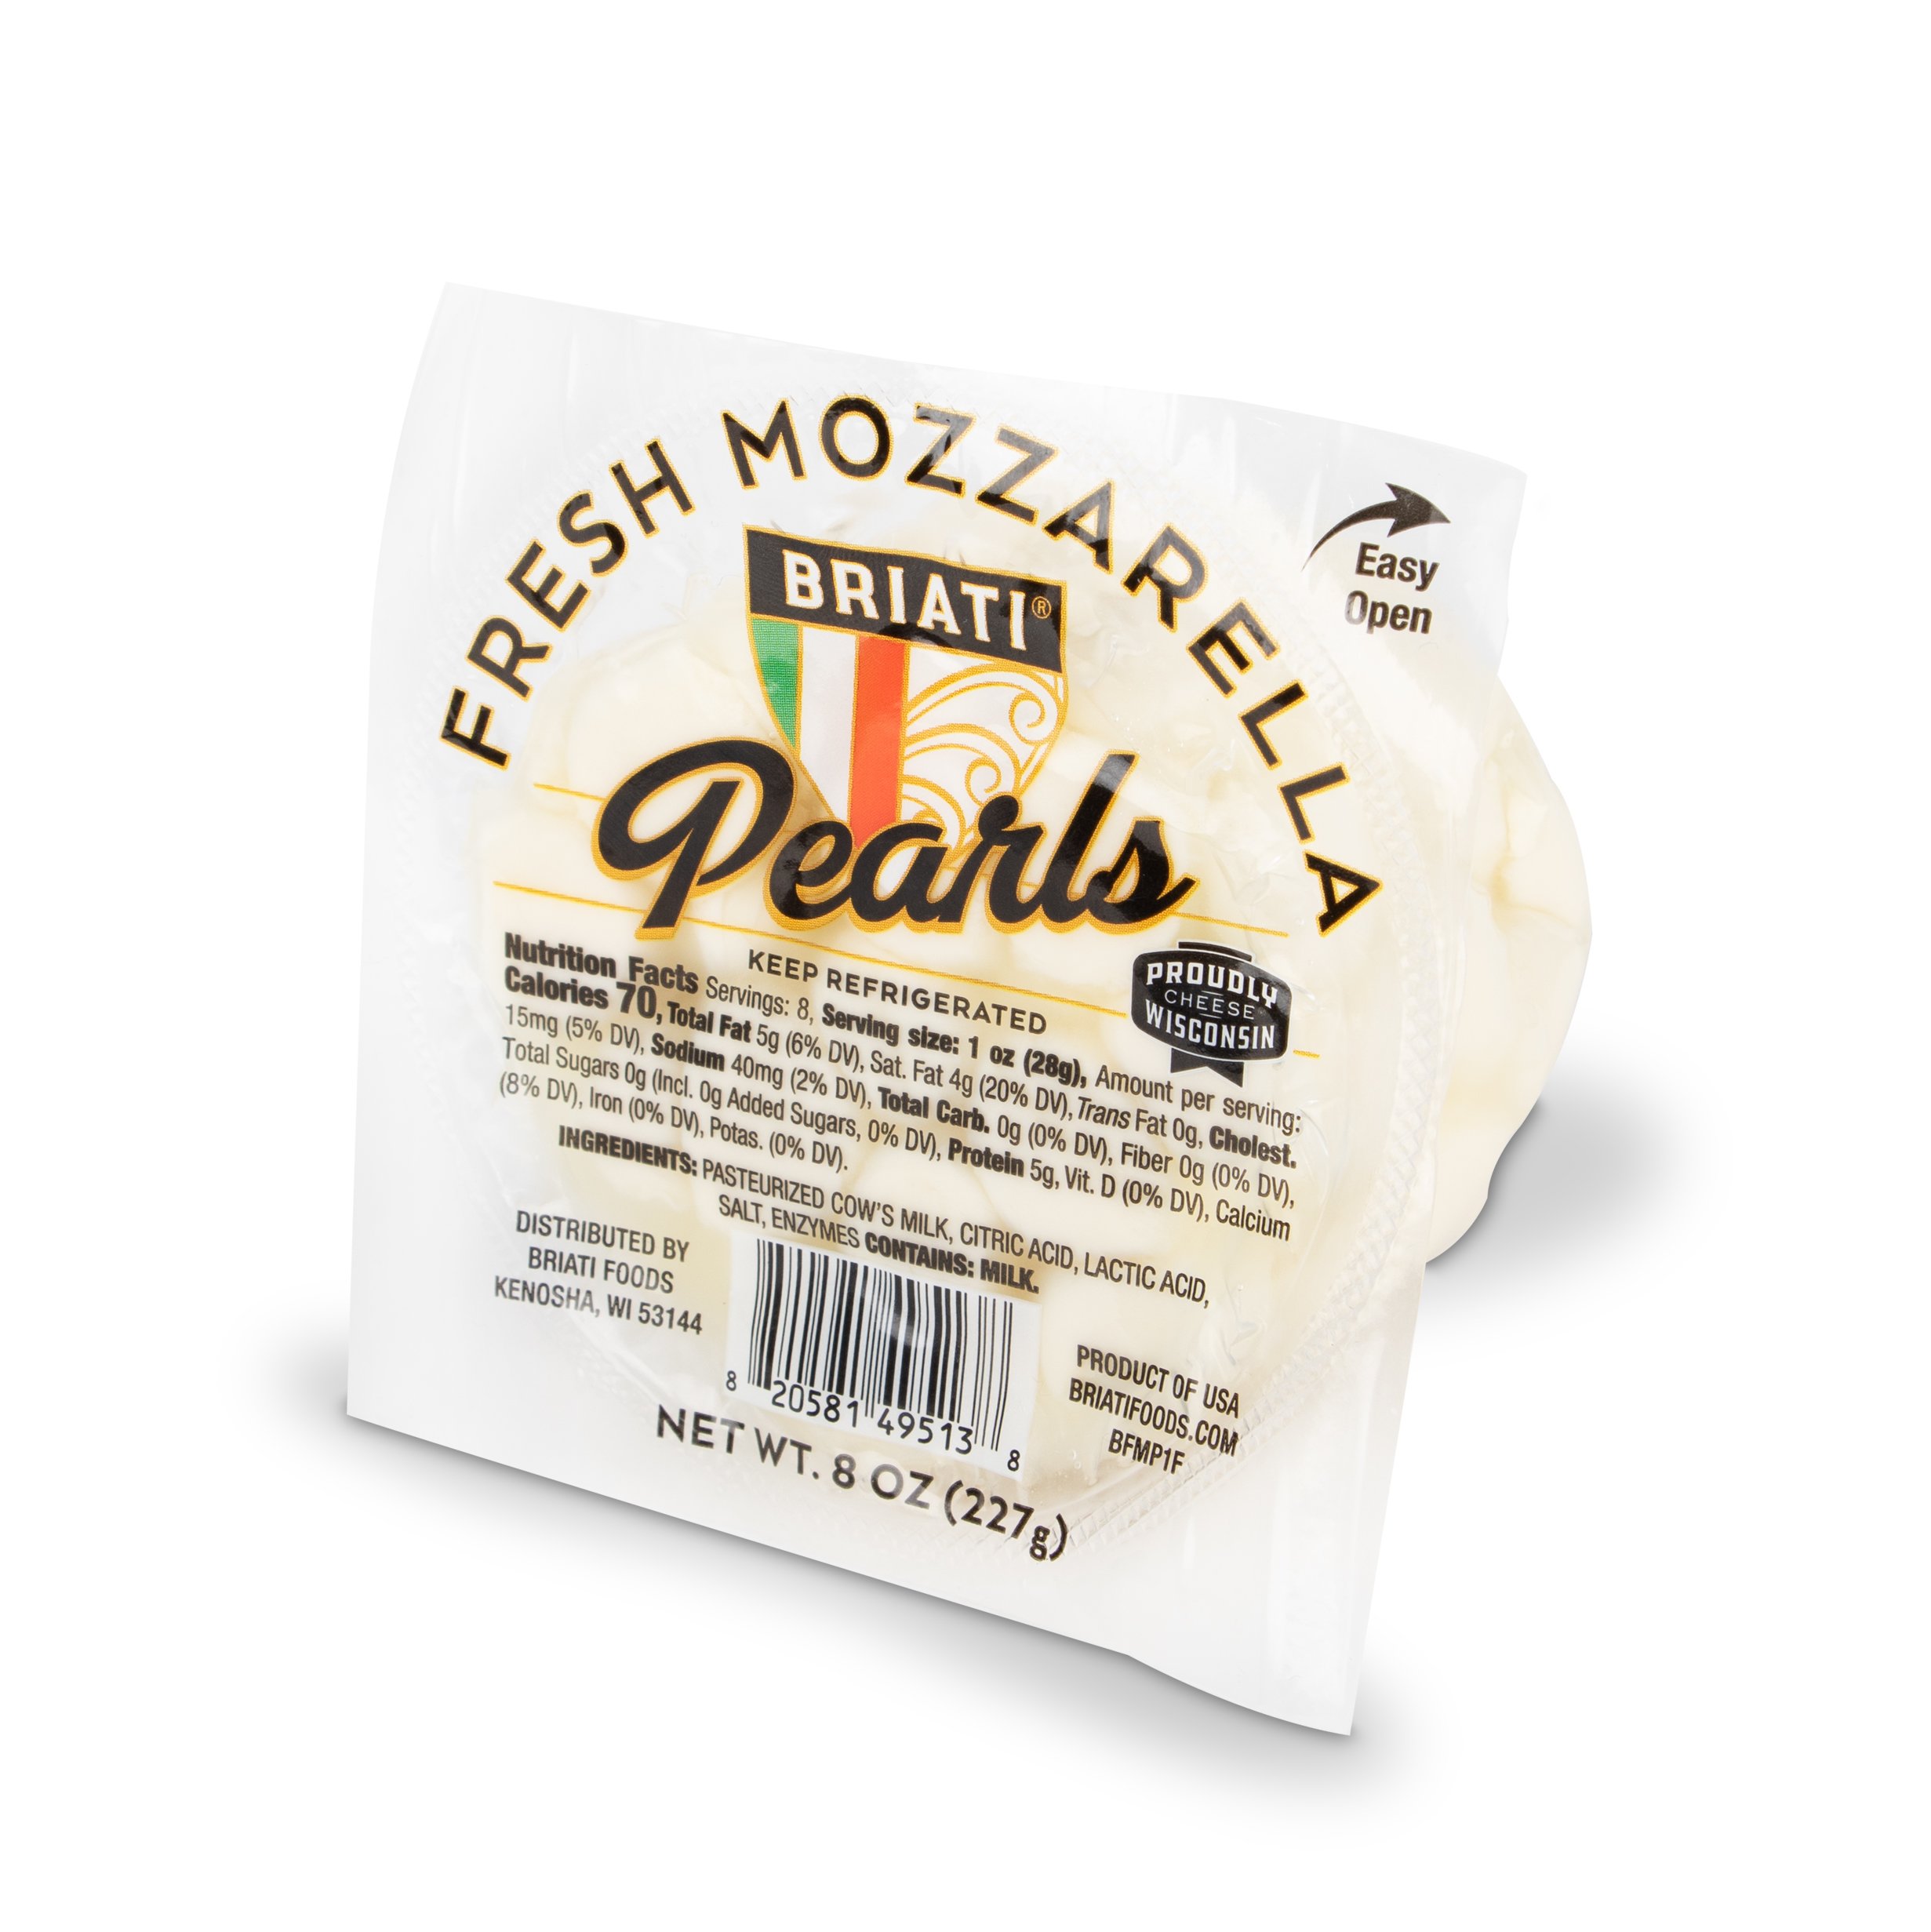 Pearls 8 Oz. - BelGioioso Cheese